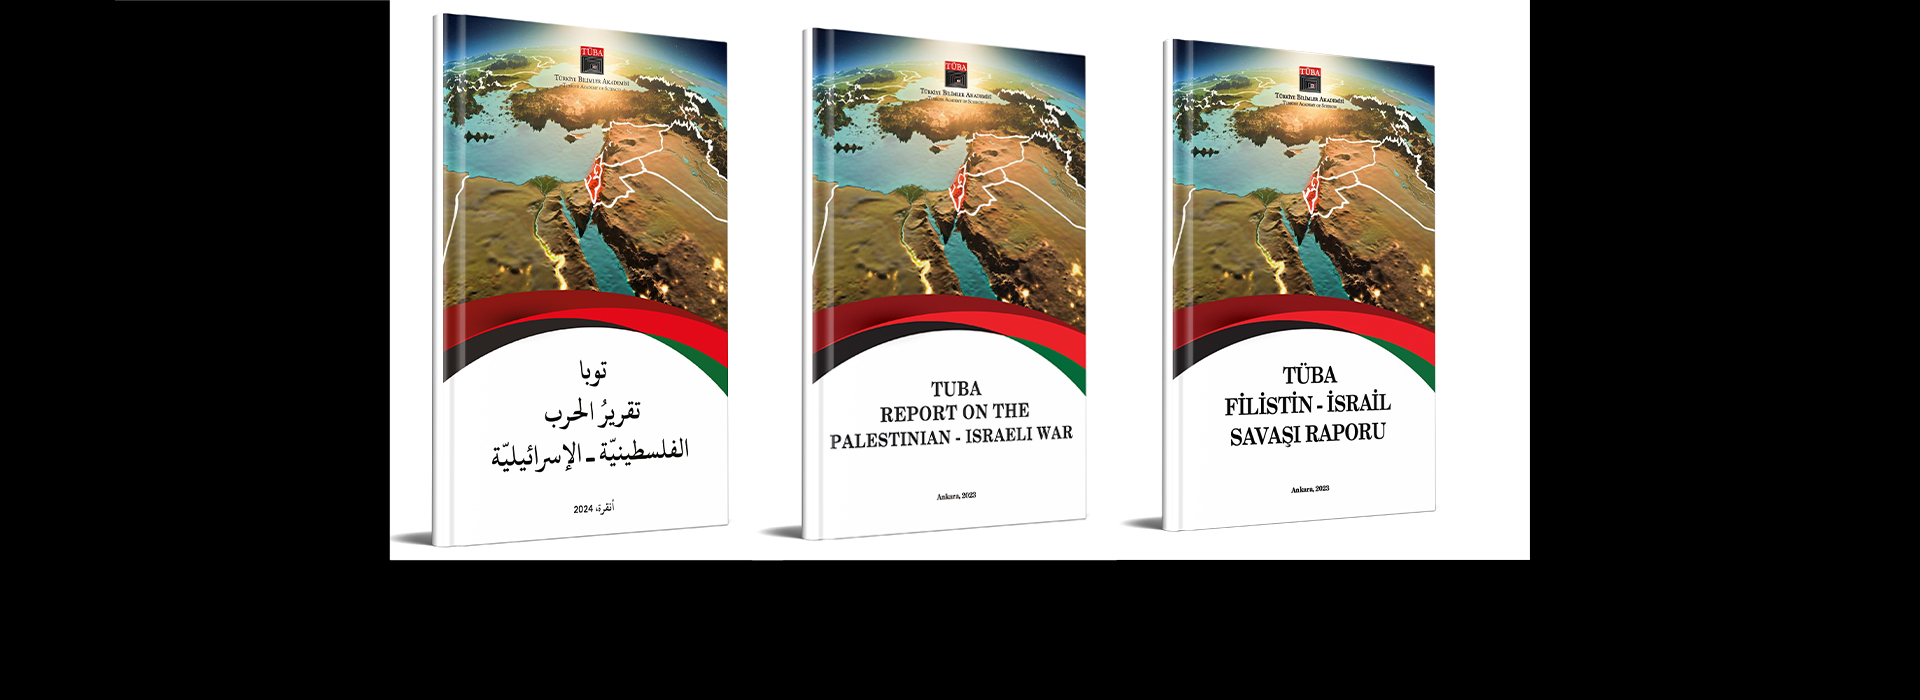 TÜBA Palestinian-Israeli War Report Has Been Published